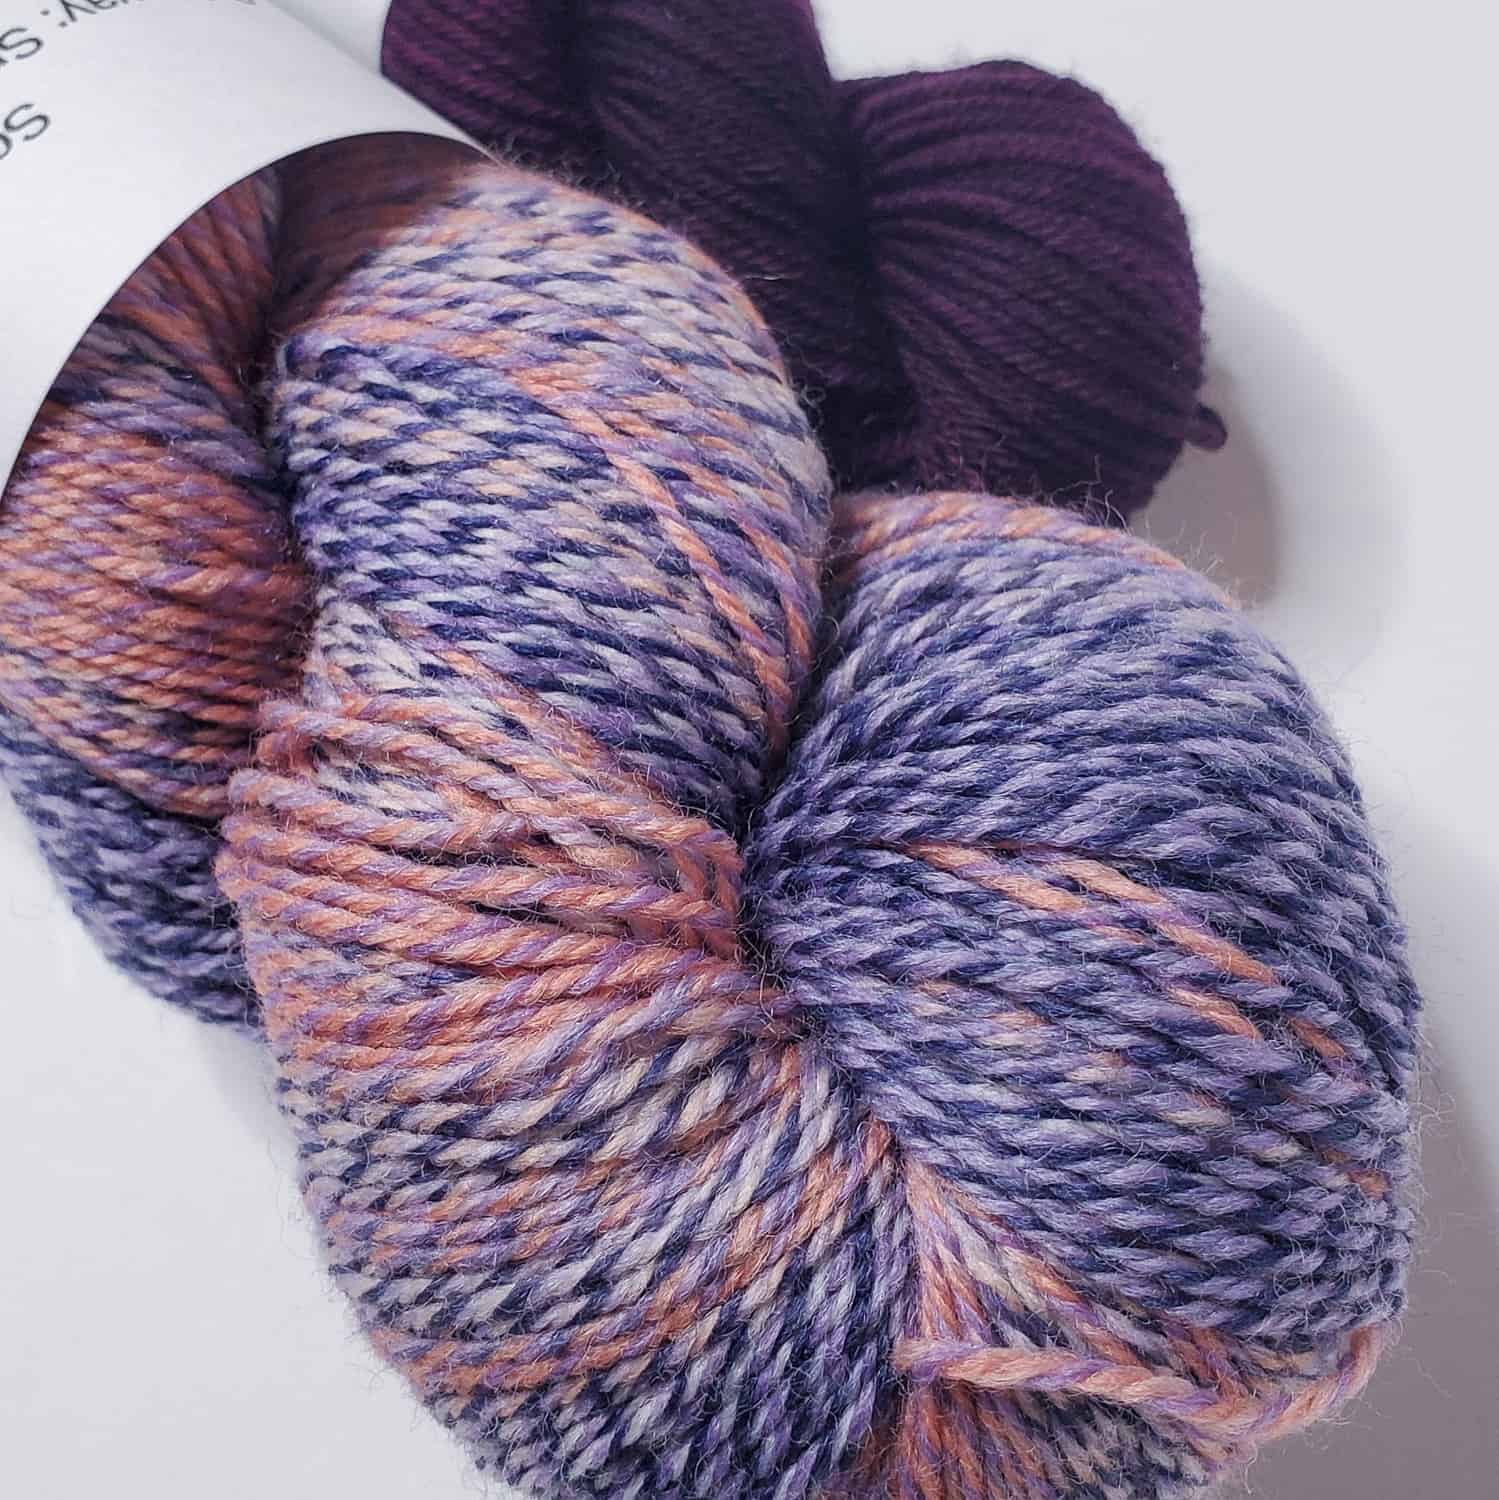 Handspun look yarn with shades of purple.